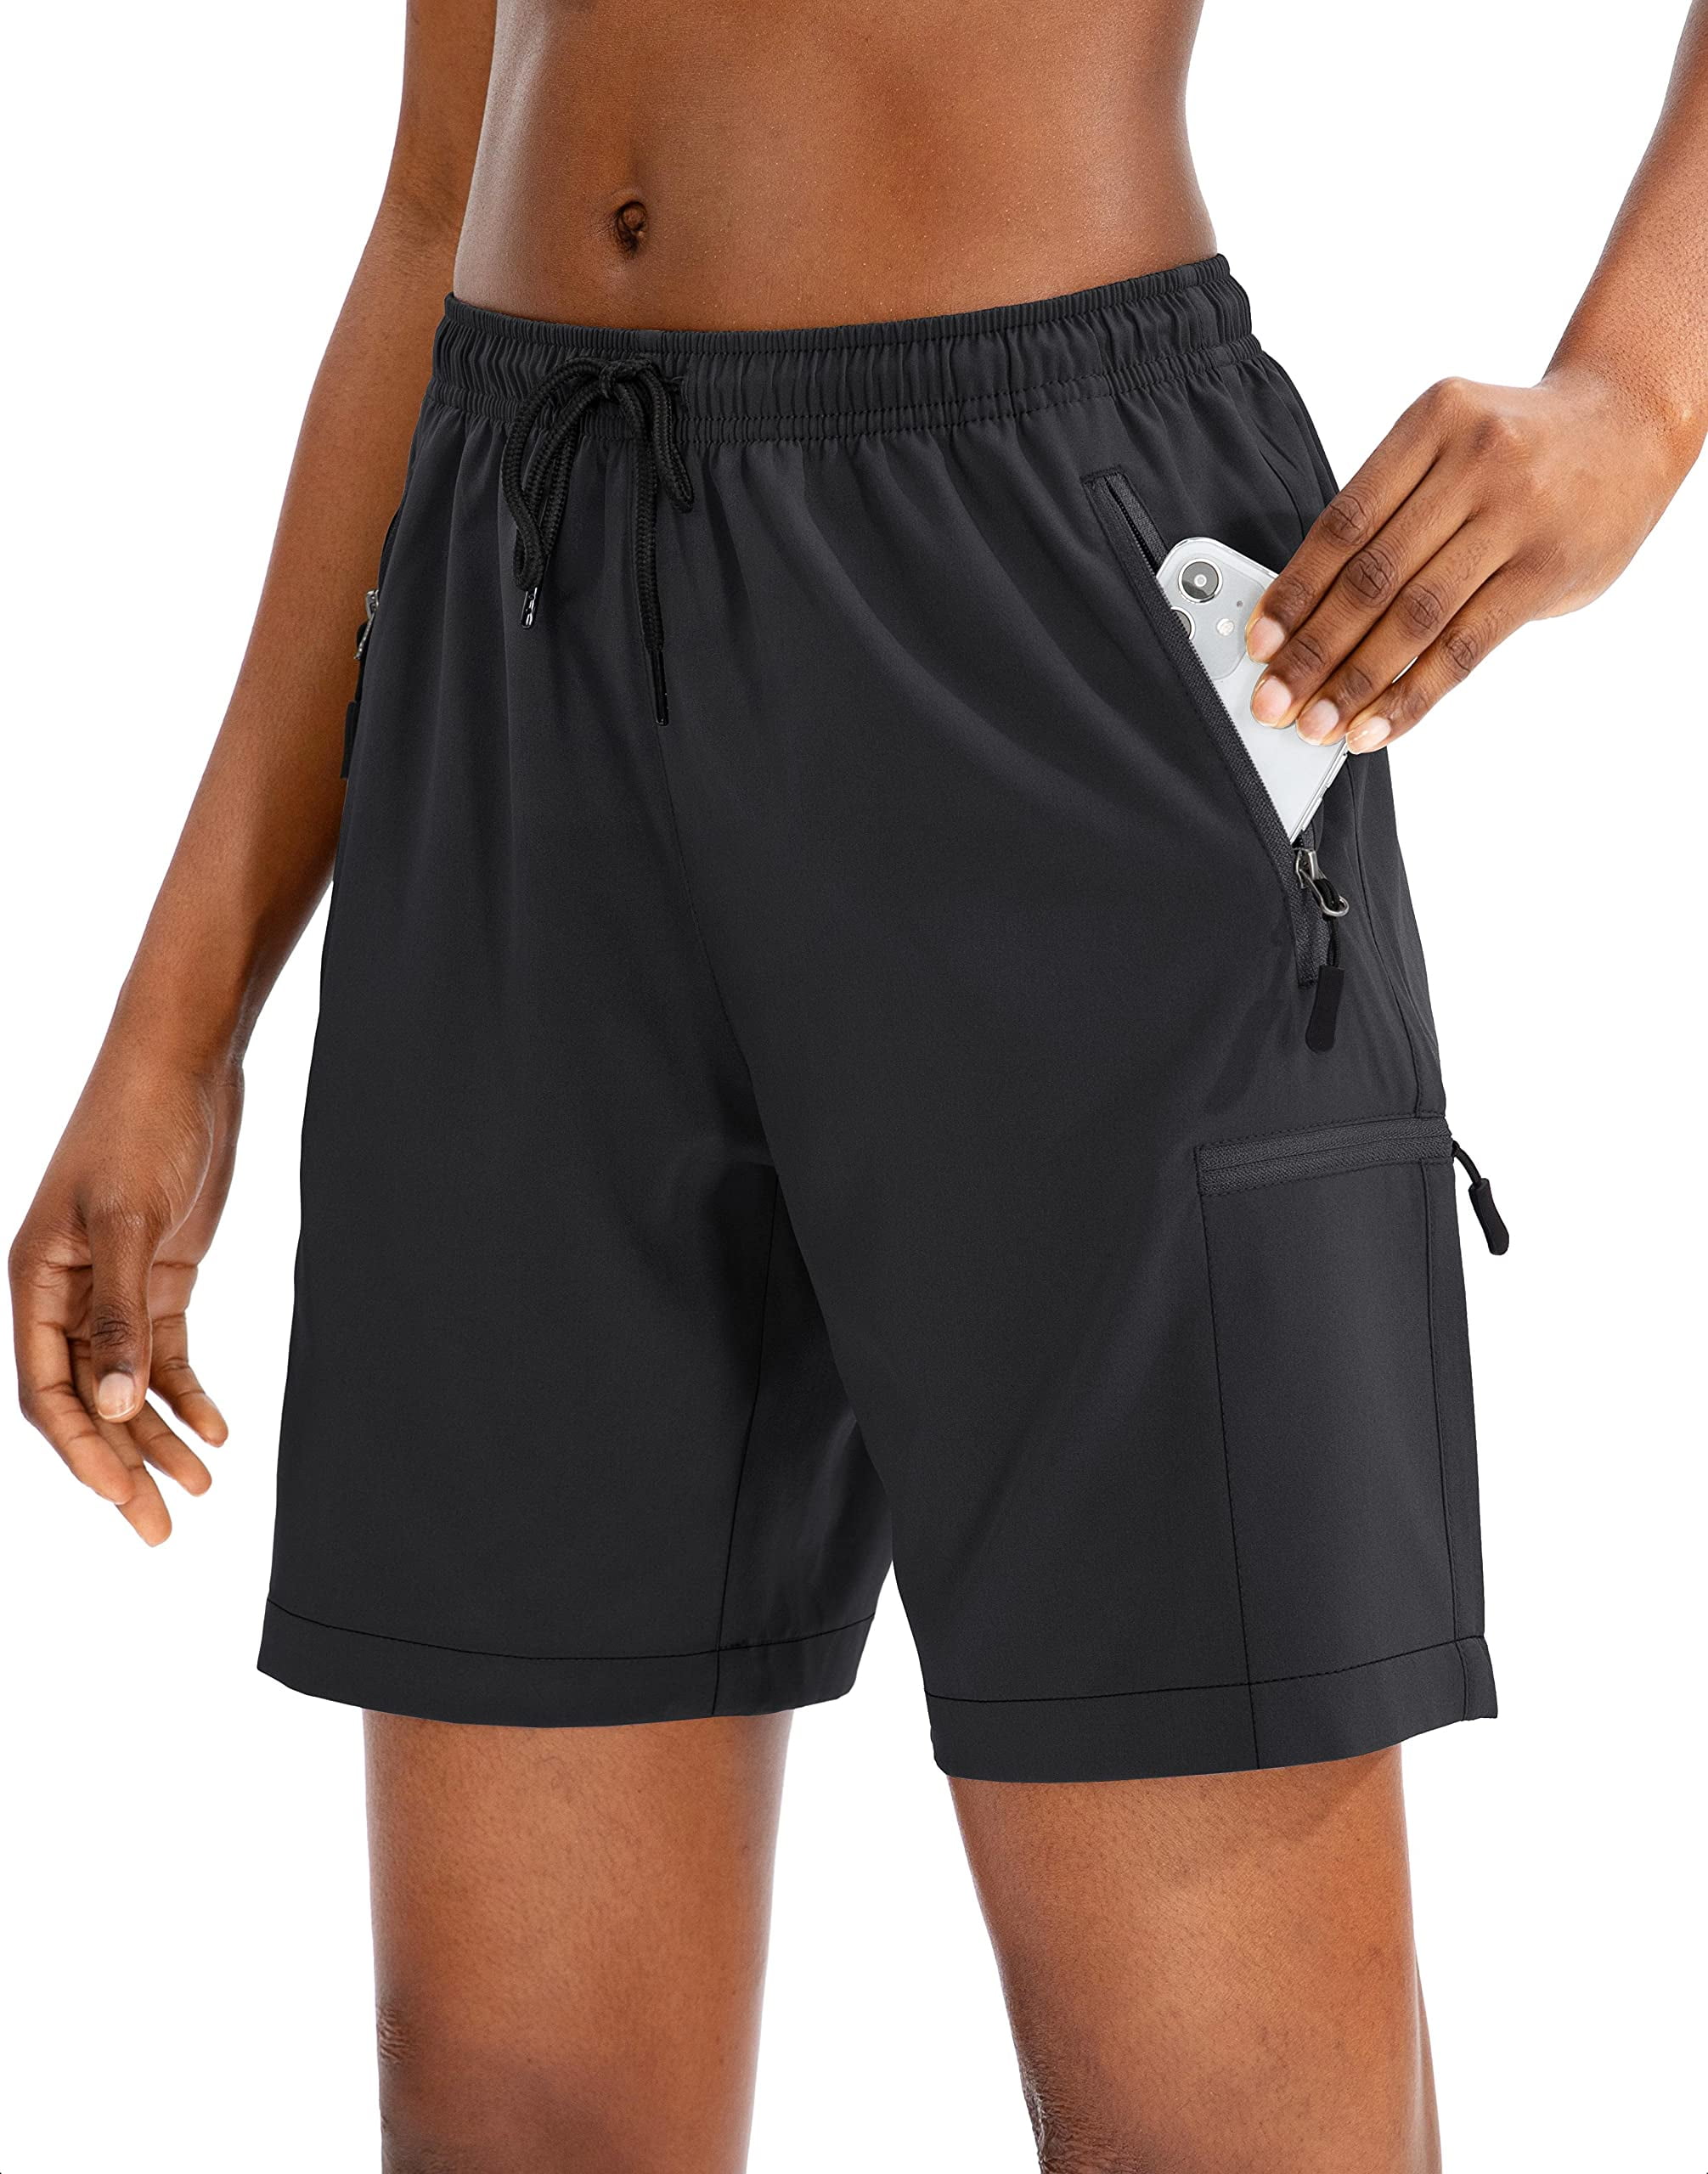 Lollanda Women's Stretch Quick Dry Shorts for Hiking, Camping, Travel -  Walmart.com